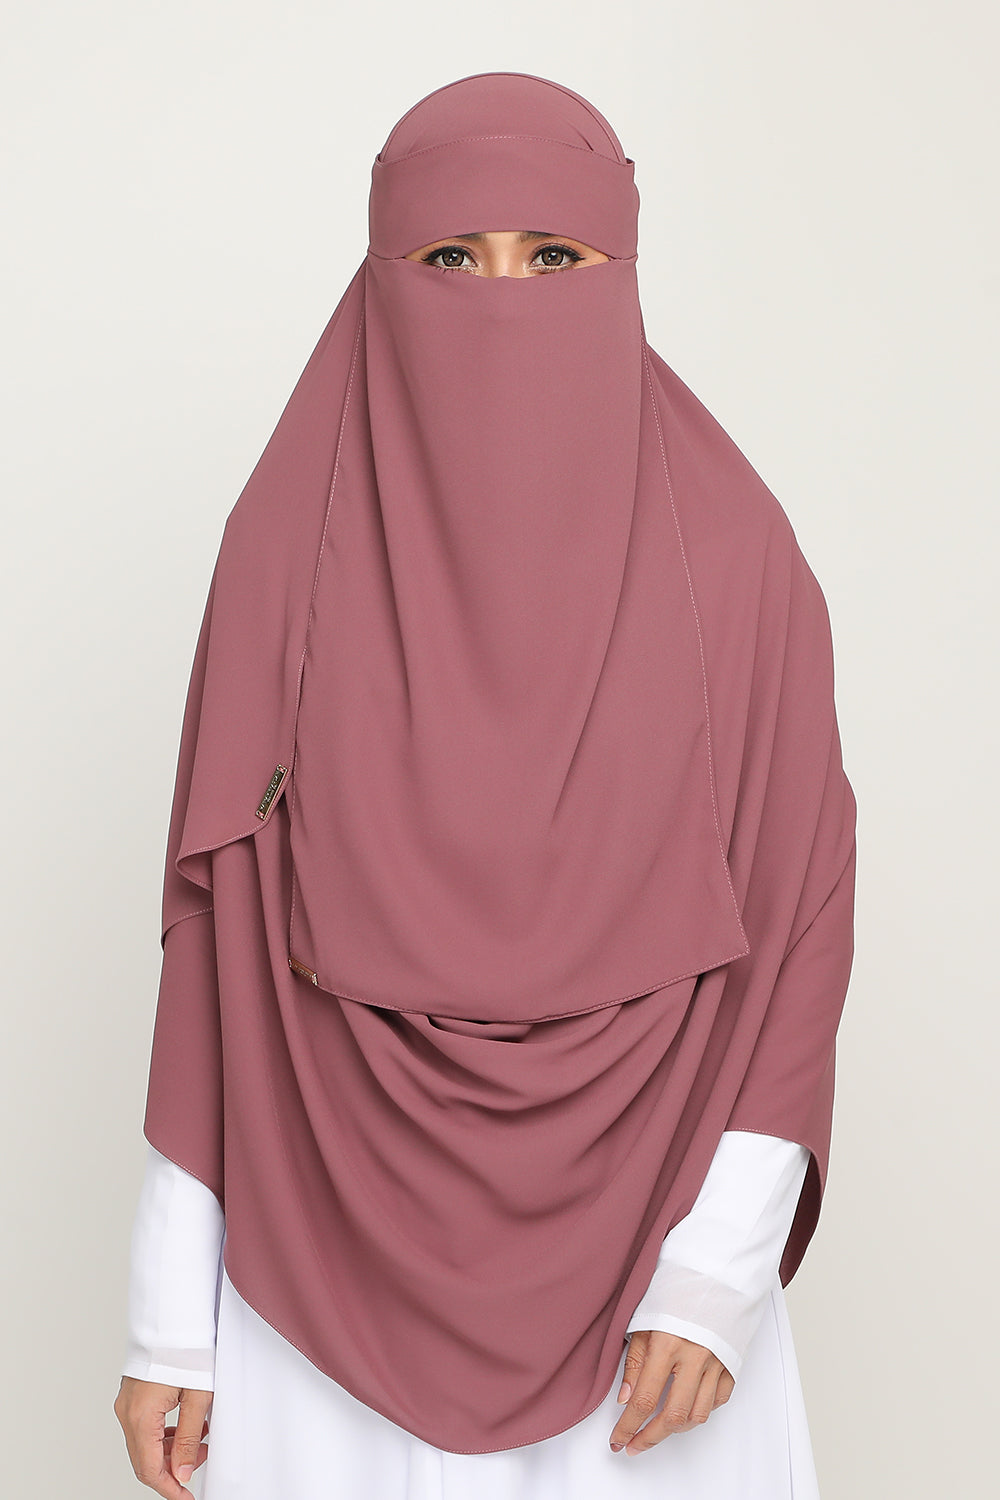 As-Is Instant Niqab Dark Ruby